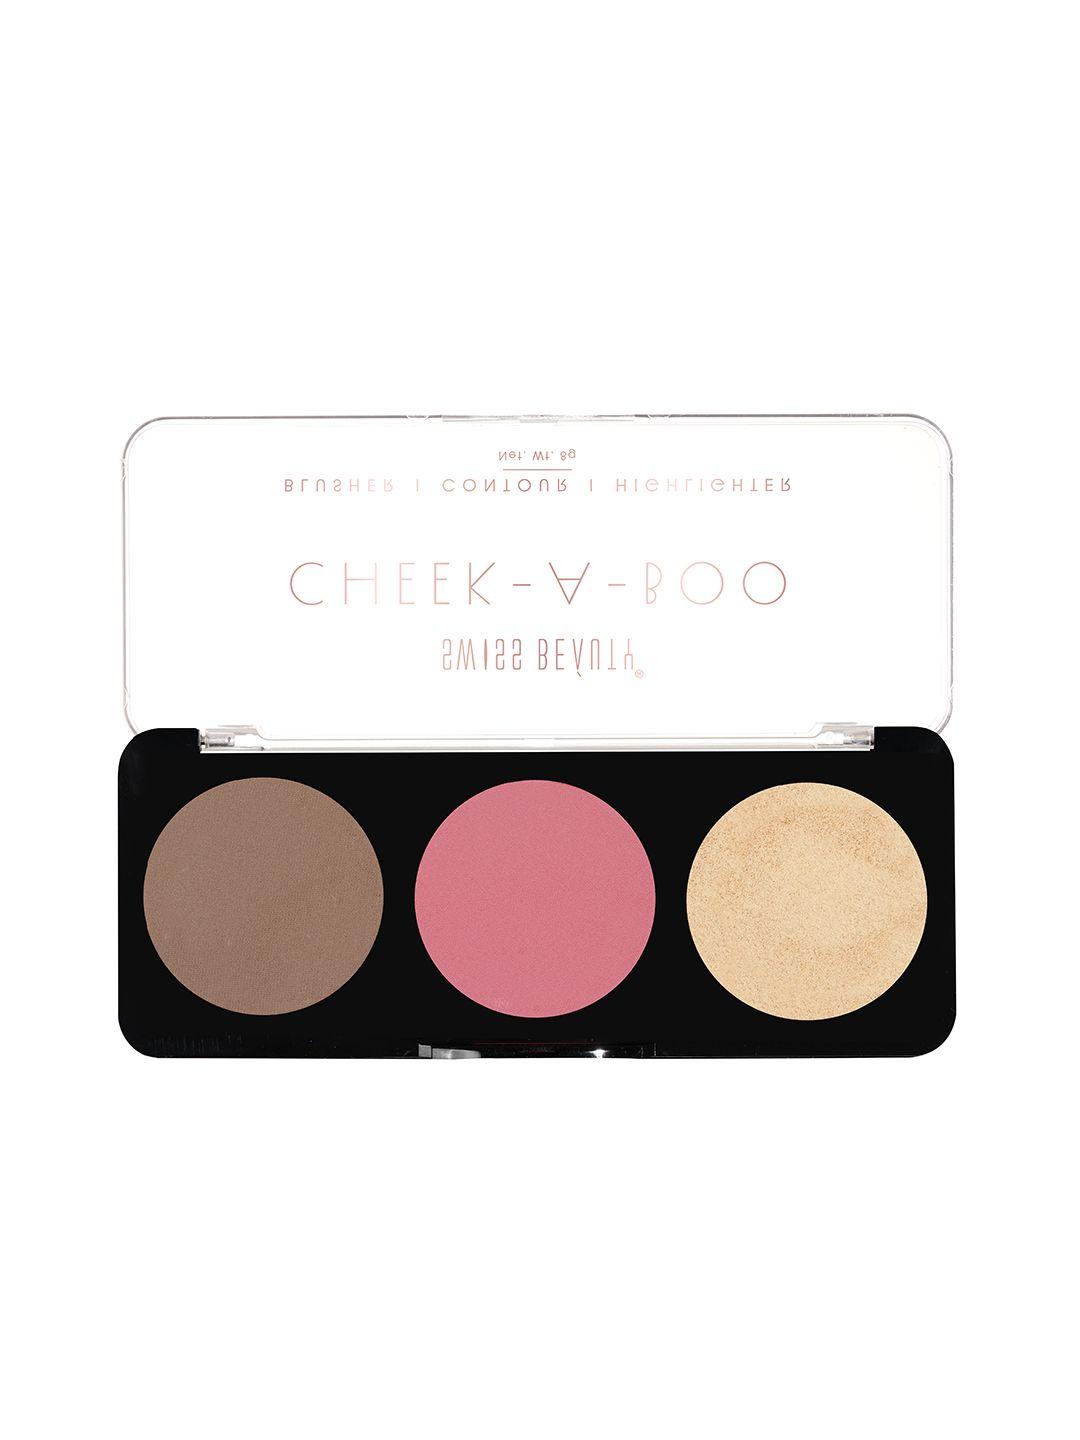 SWISS BEAUTY Cheek-A-Boo 3 In One Highlighter Contour & Blusher Face Palette 8g - 01